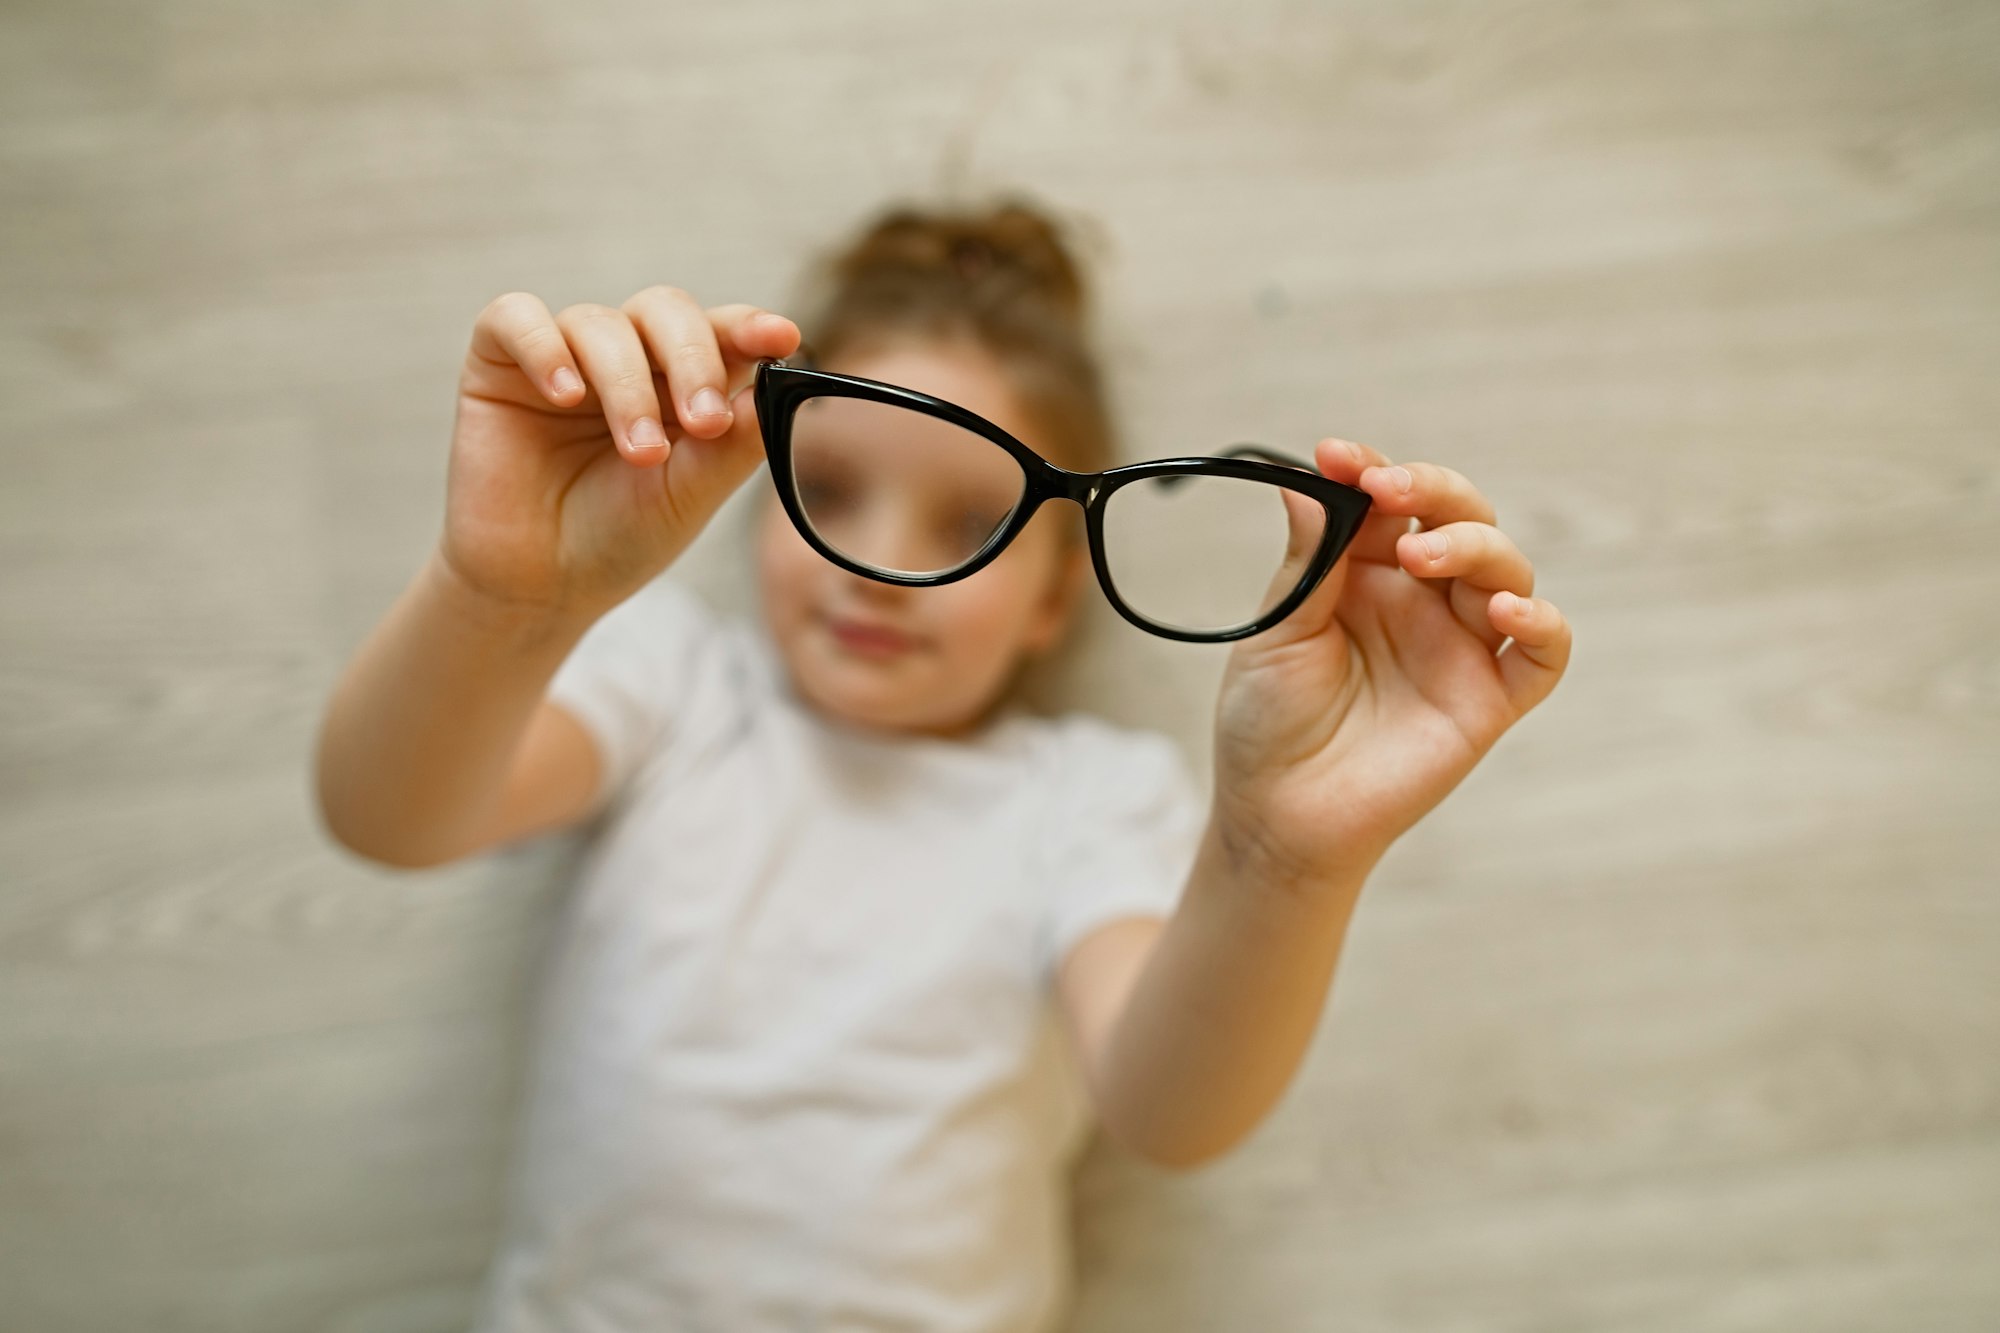 Child girl holding black-framed glasses in hands. Glasses in focus, child is blurred